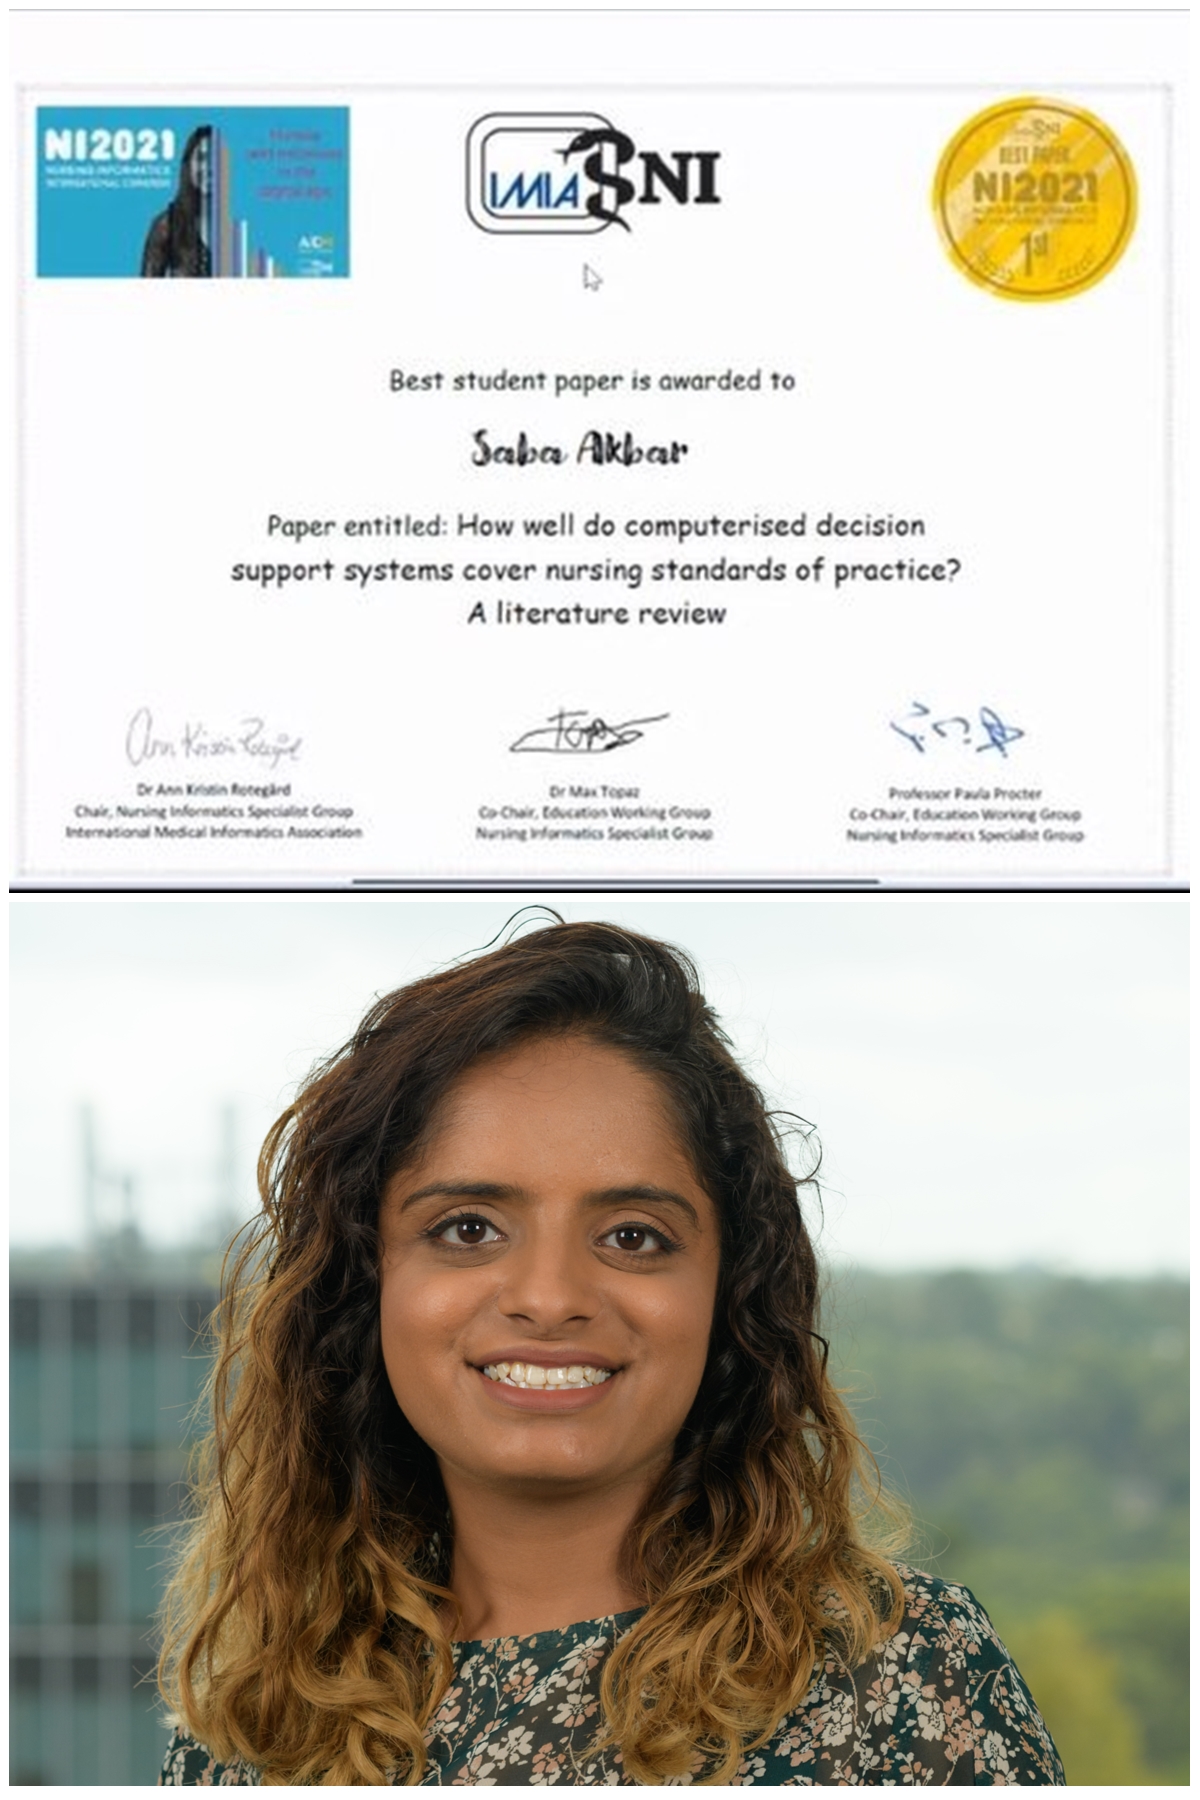 Macquarie University - Saba Akbar wins Best student paper award at NI2021